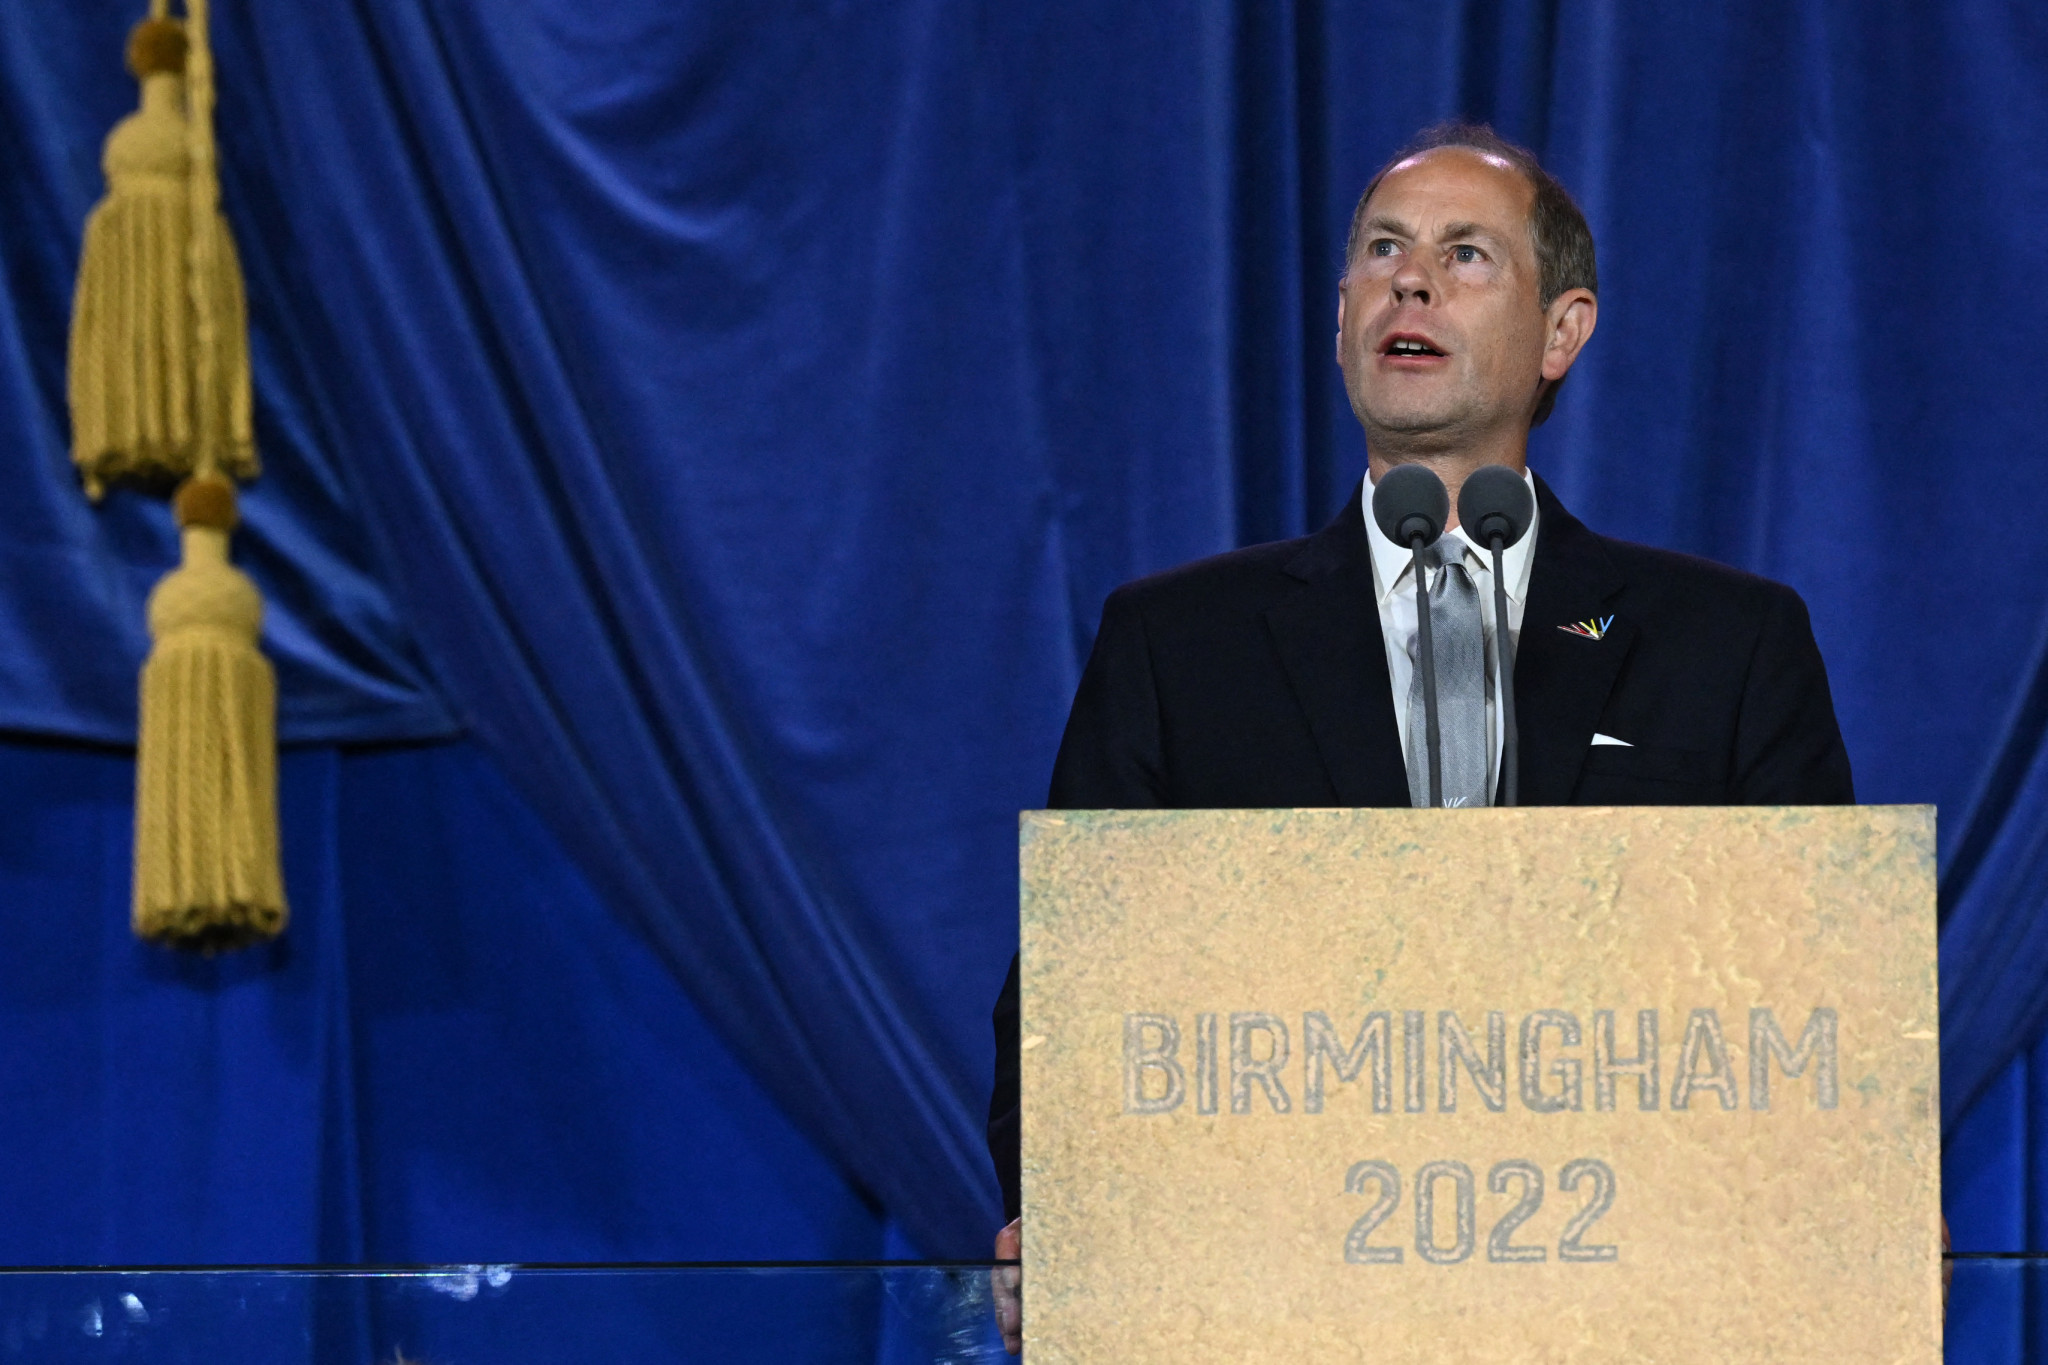 CGF vice-patron Prince Edward claimed Birmingham 2022 had 